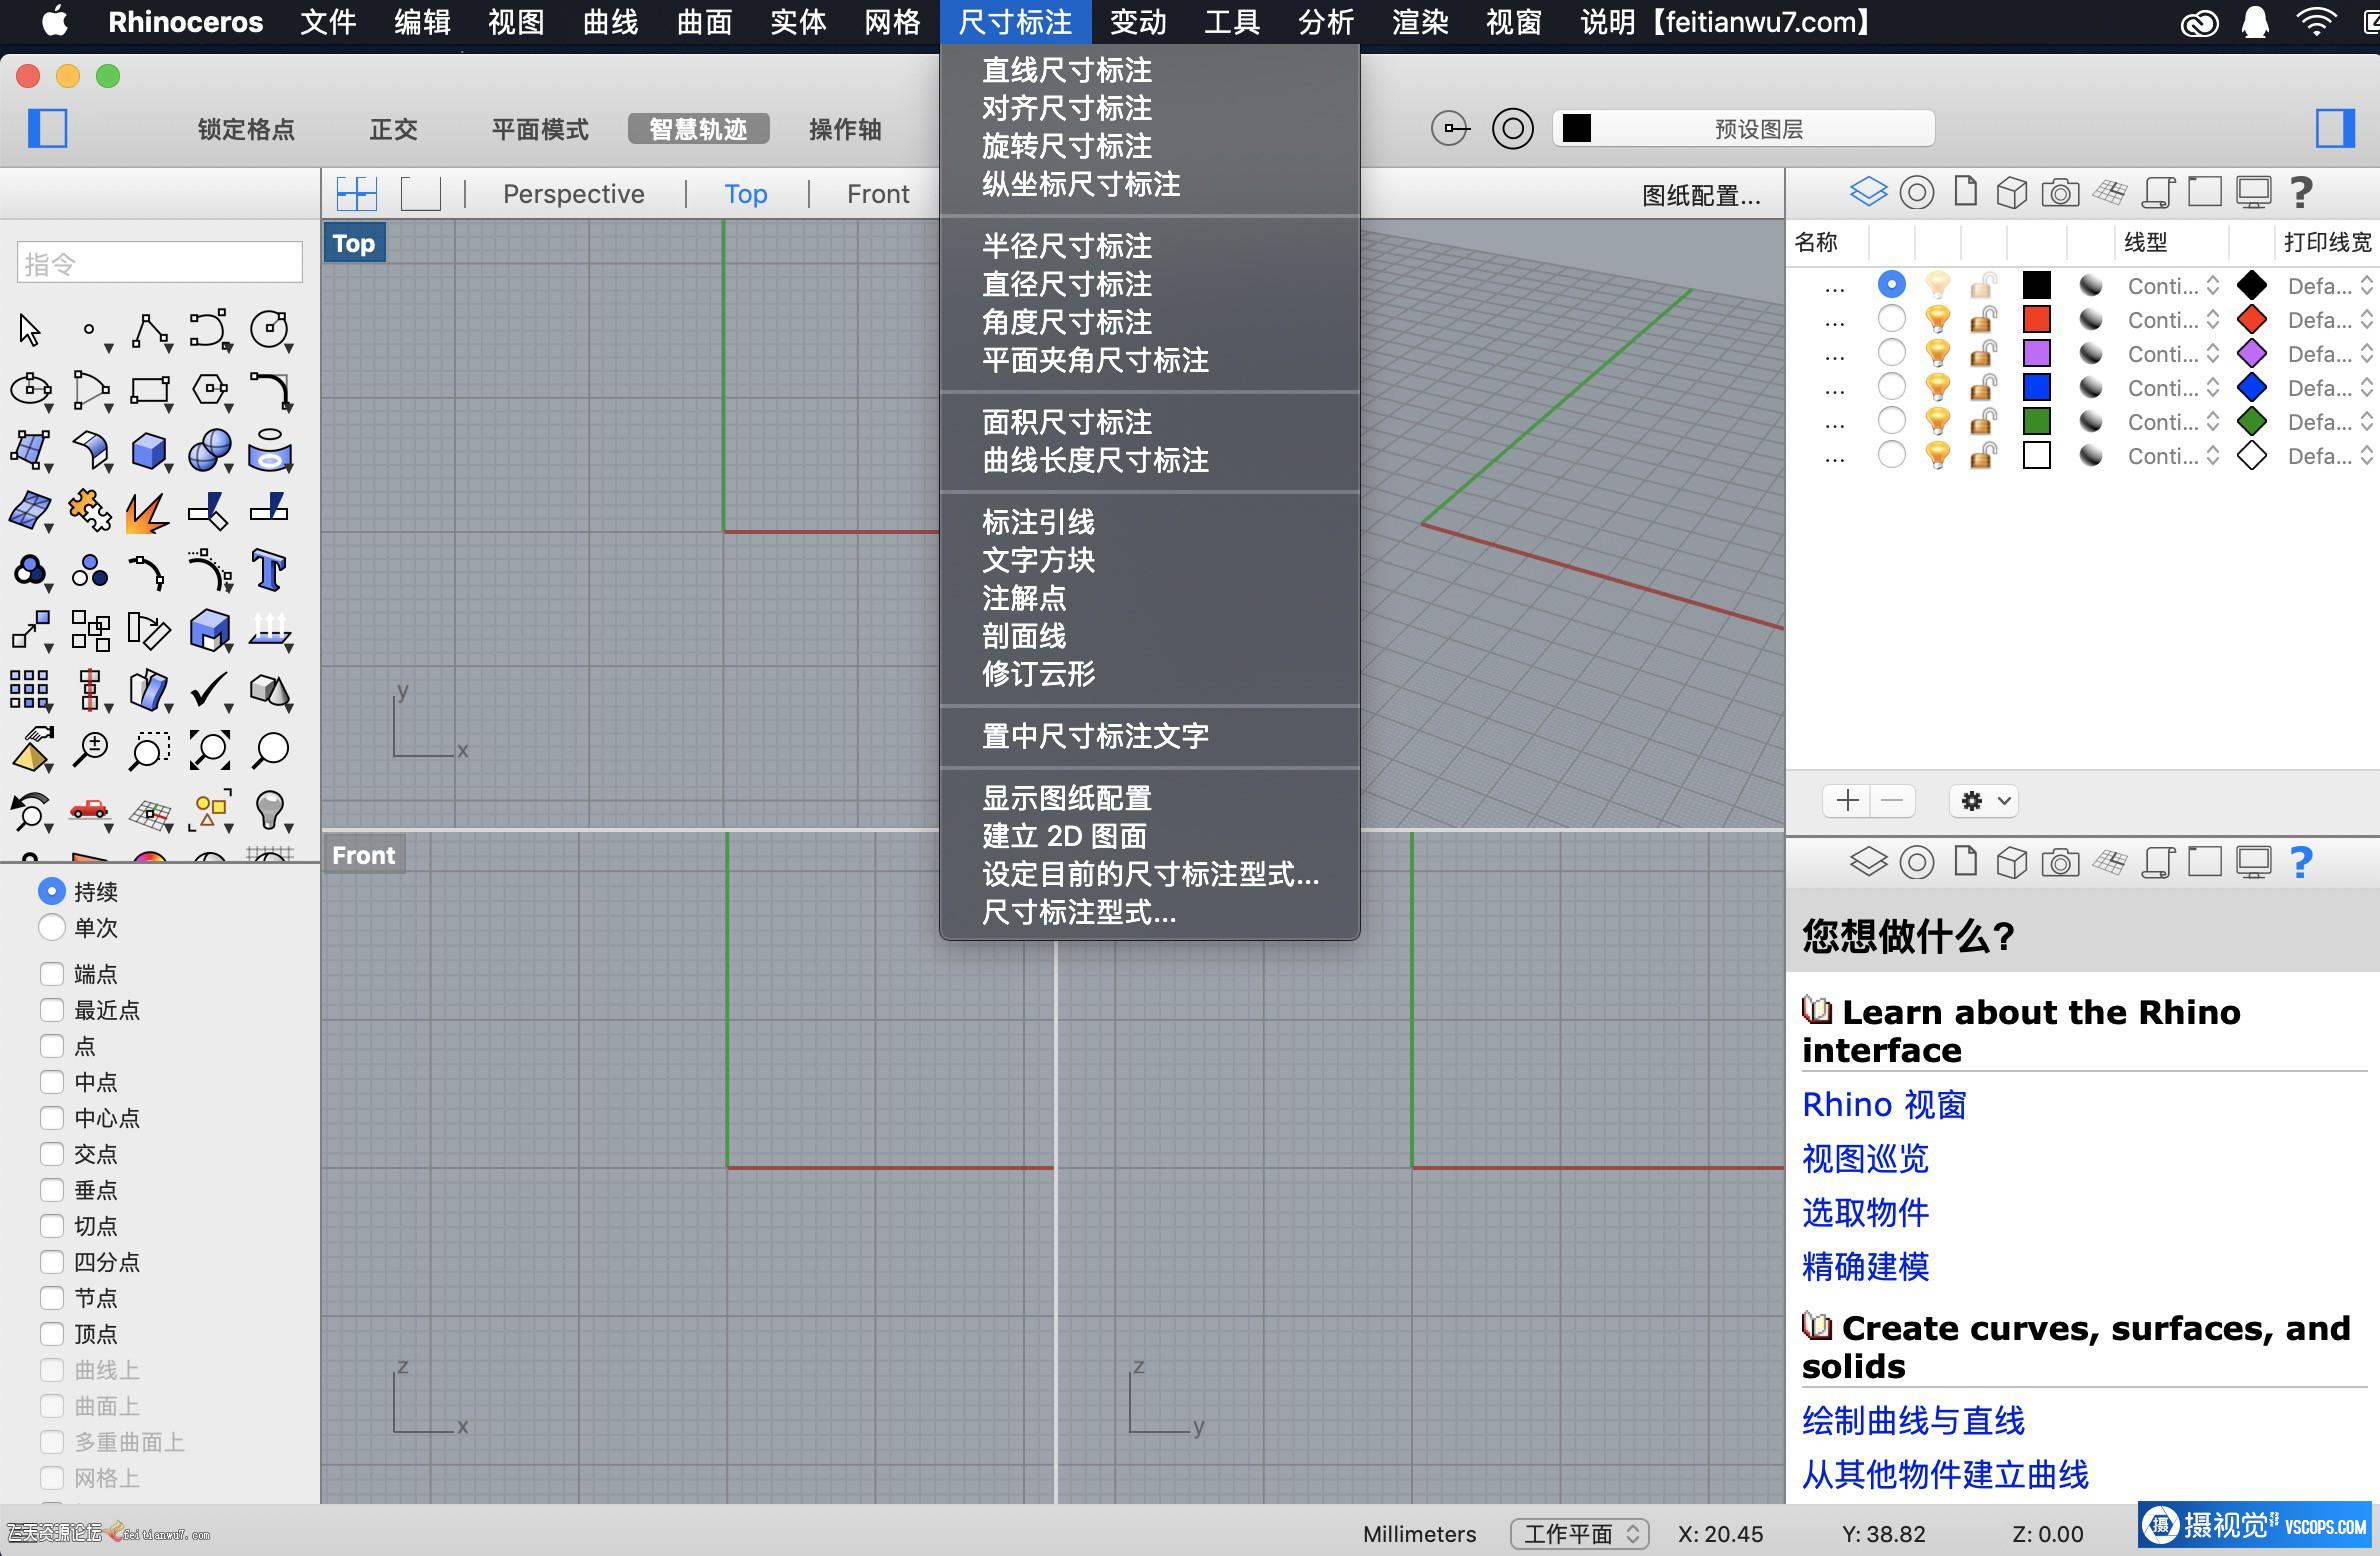 Rhinoceros 犀牛 for Mac v5.5.3 3D建模软件中文版下载插图1